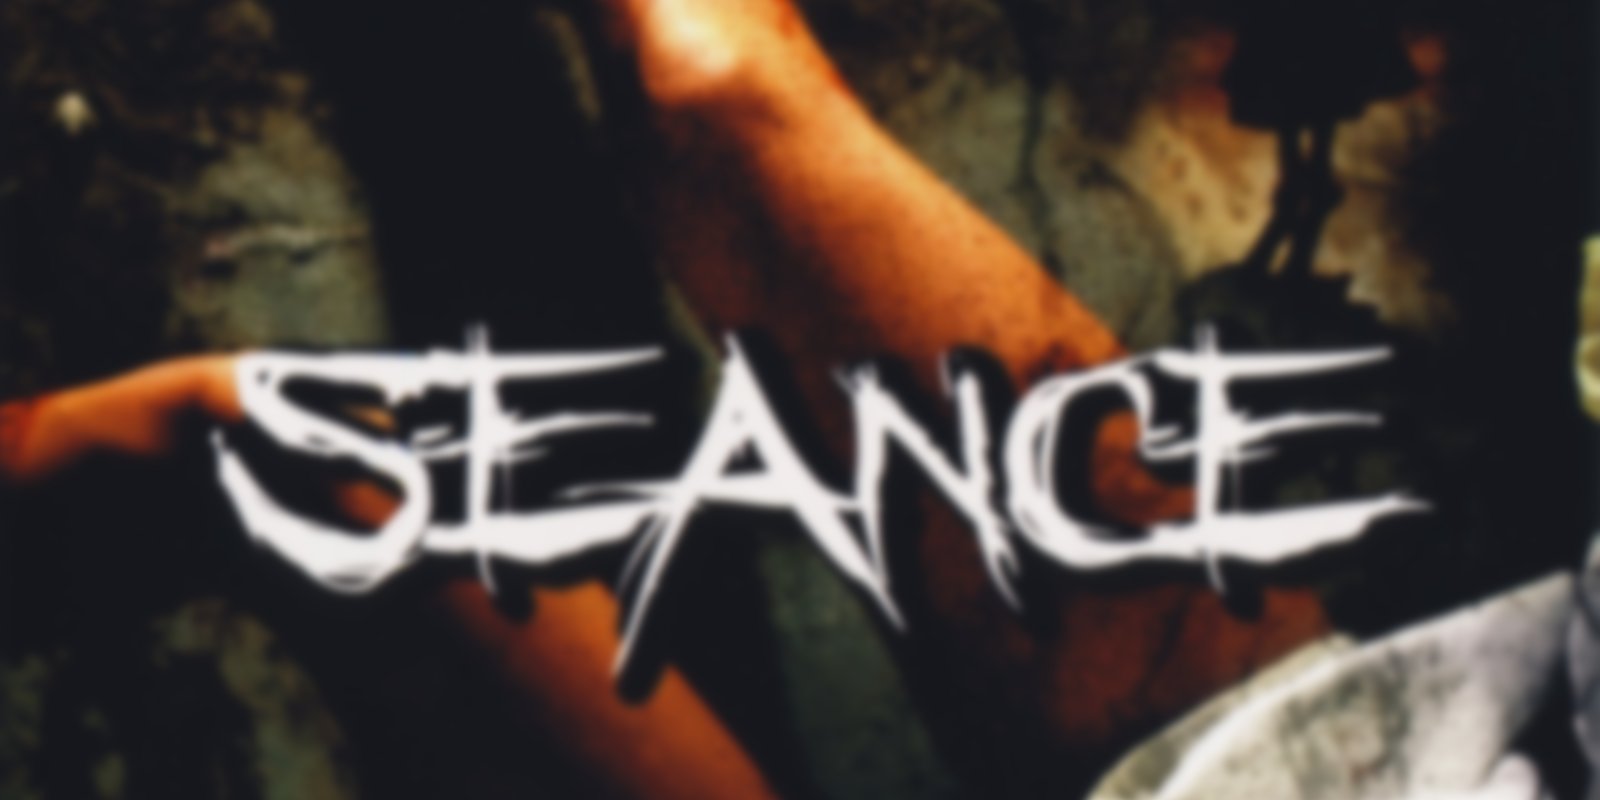 Seance - The Summoning